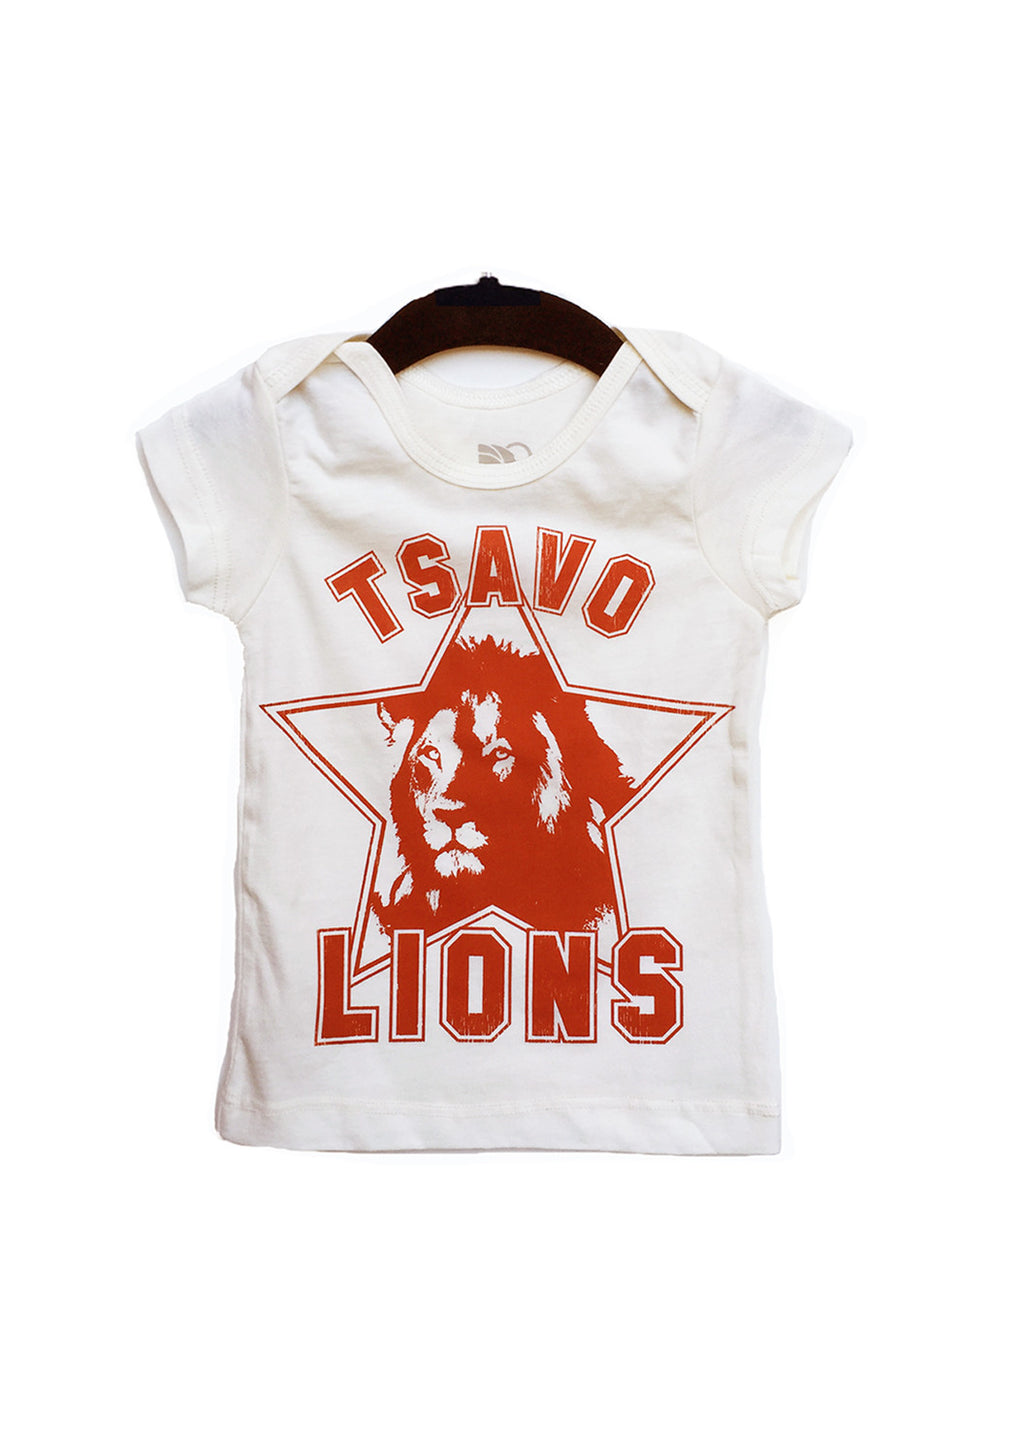 Unisex Baby Tsavo Lions